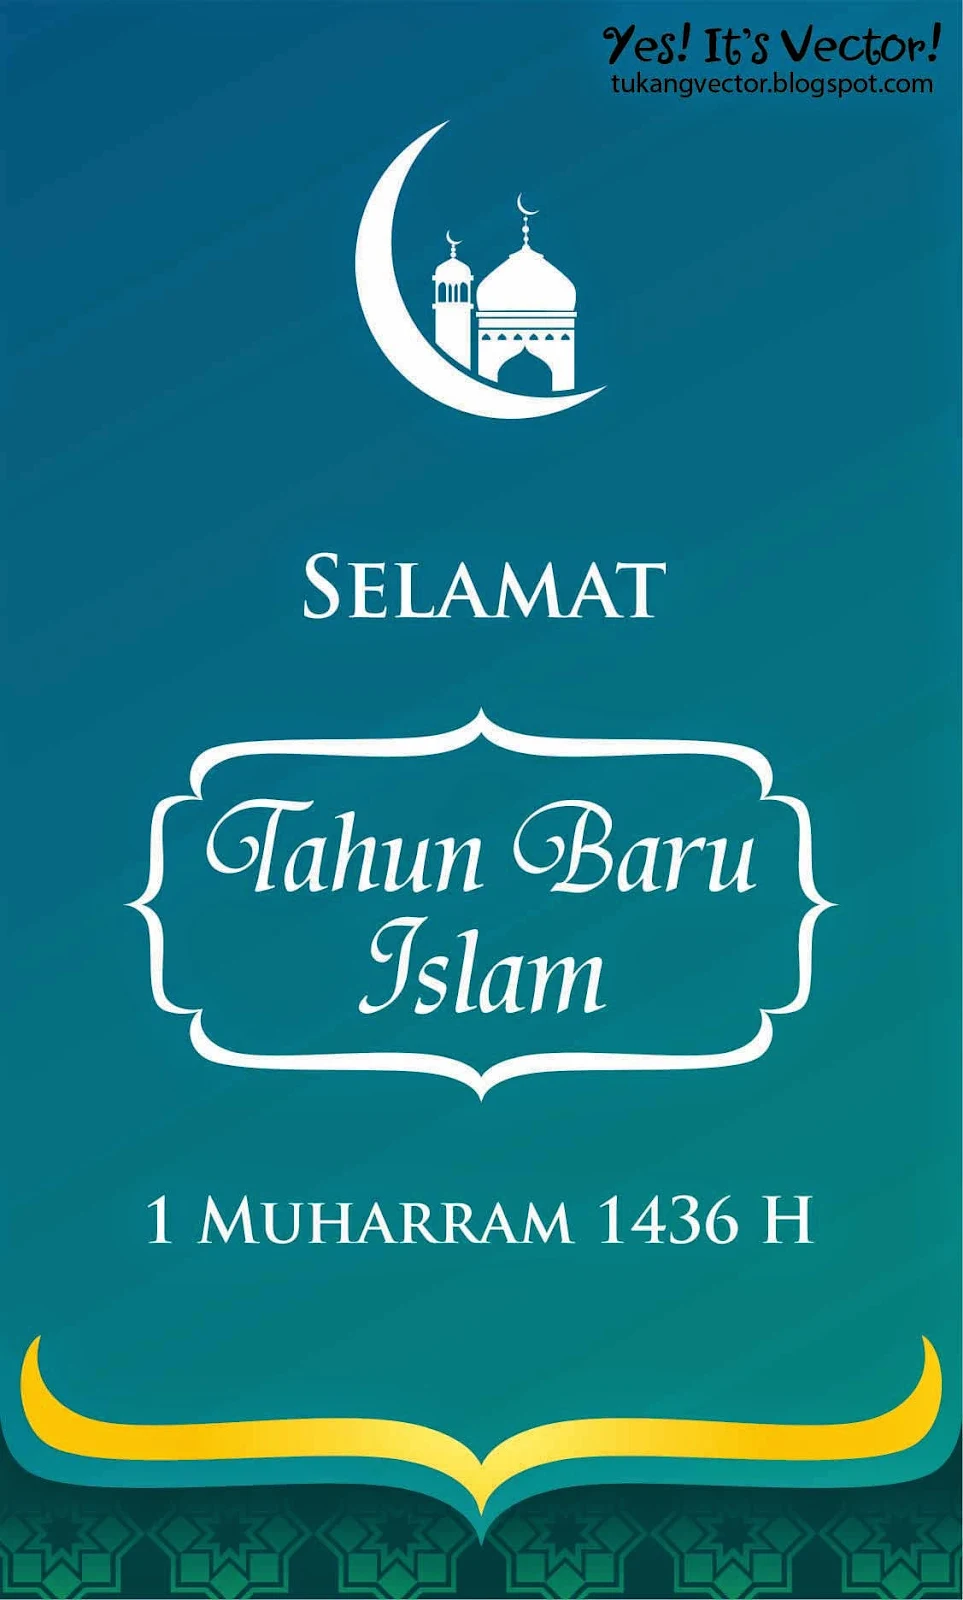 MI HAYATUL ISLAM: DOWNLOAD TEMPLATE BANNER TAHUN BARU ISLAM 1438 H 2017 M